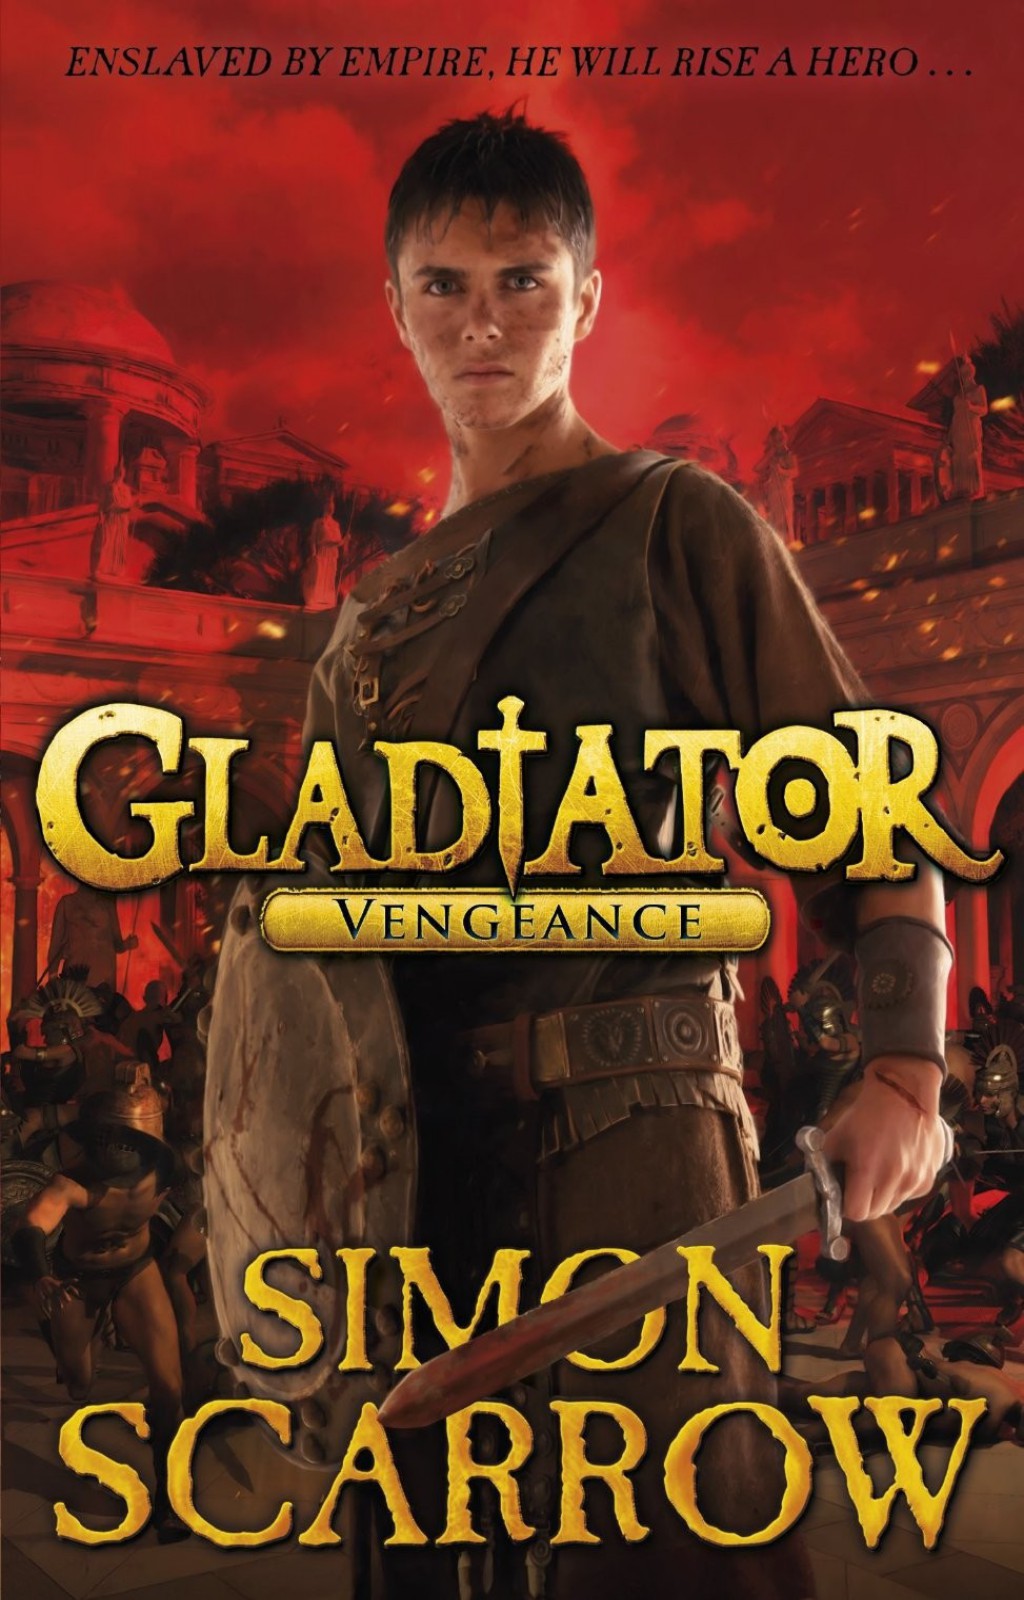 Gladiator: Vengeance by Simon Scarrow